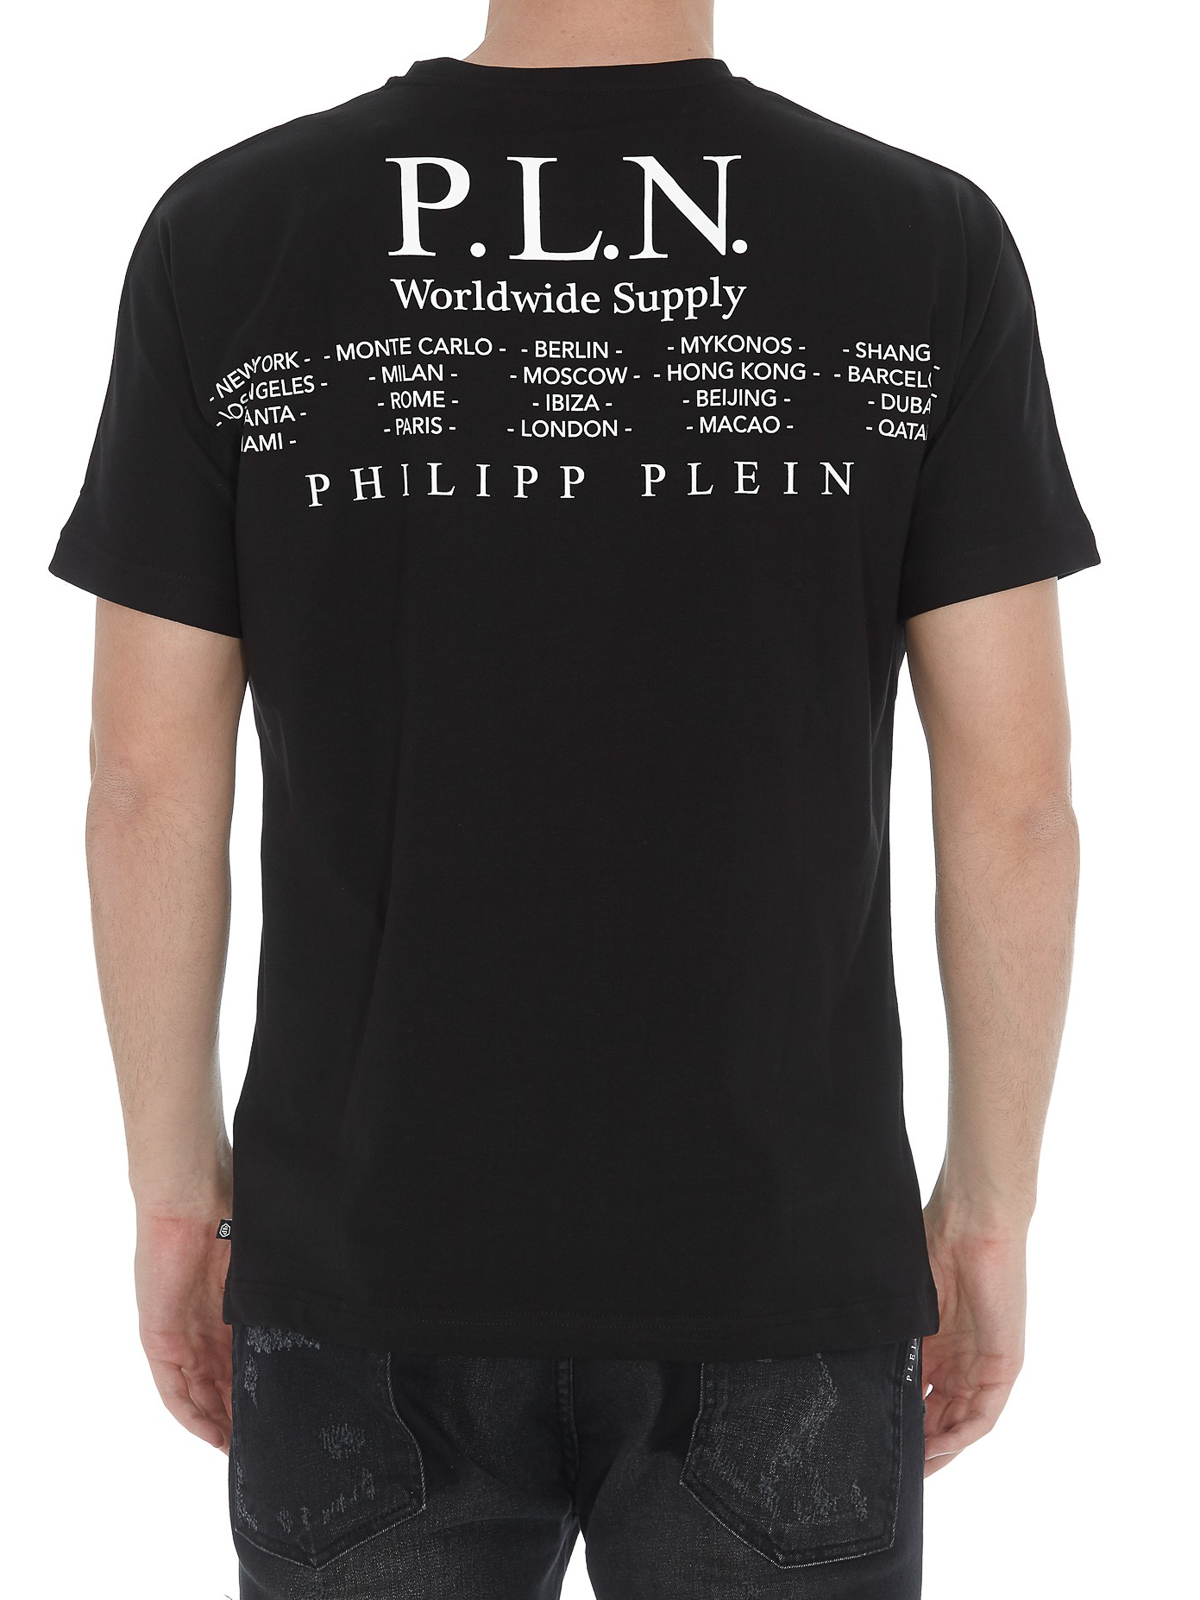 T-shirts Philipp Plein - P.L.N. Worldwide Supply black cotton T 